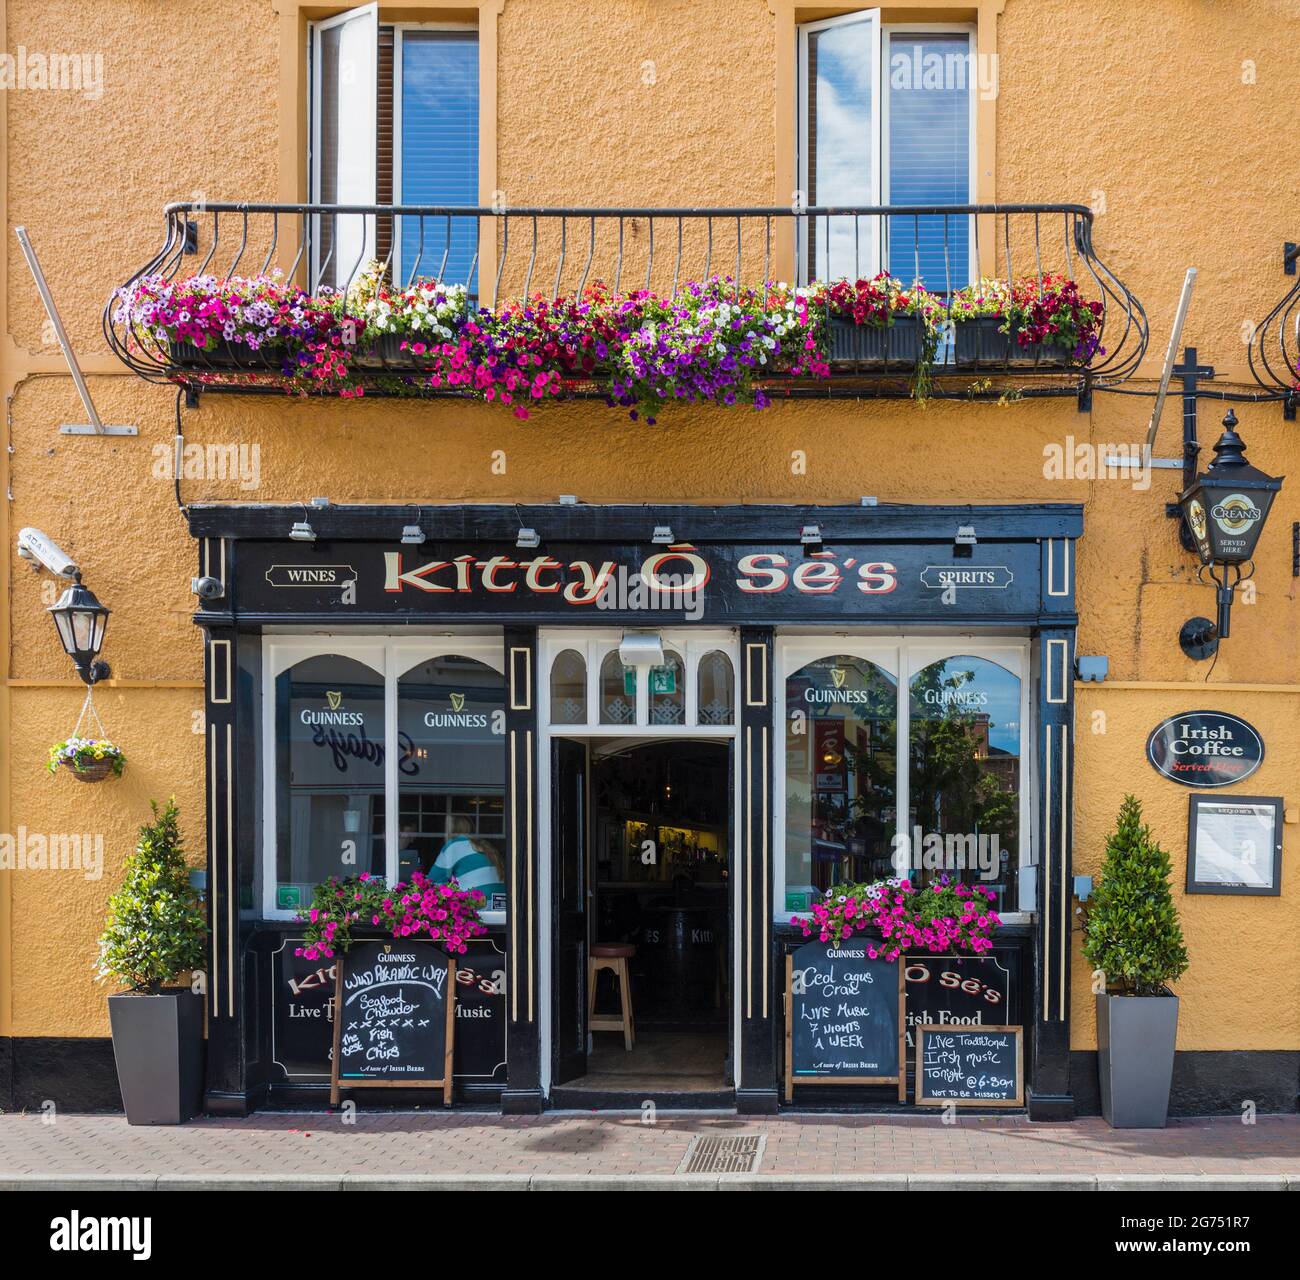 Kinsale, West Cork, County Cork, Republik Irland. Irland. Kitty O SE's Pub. Stockfoto